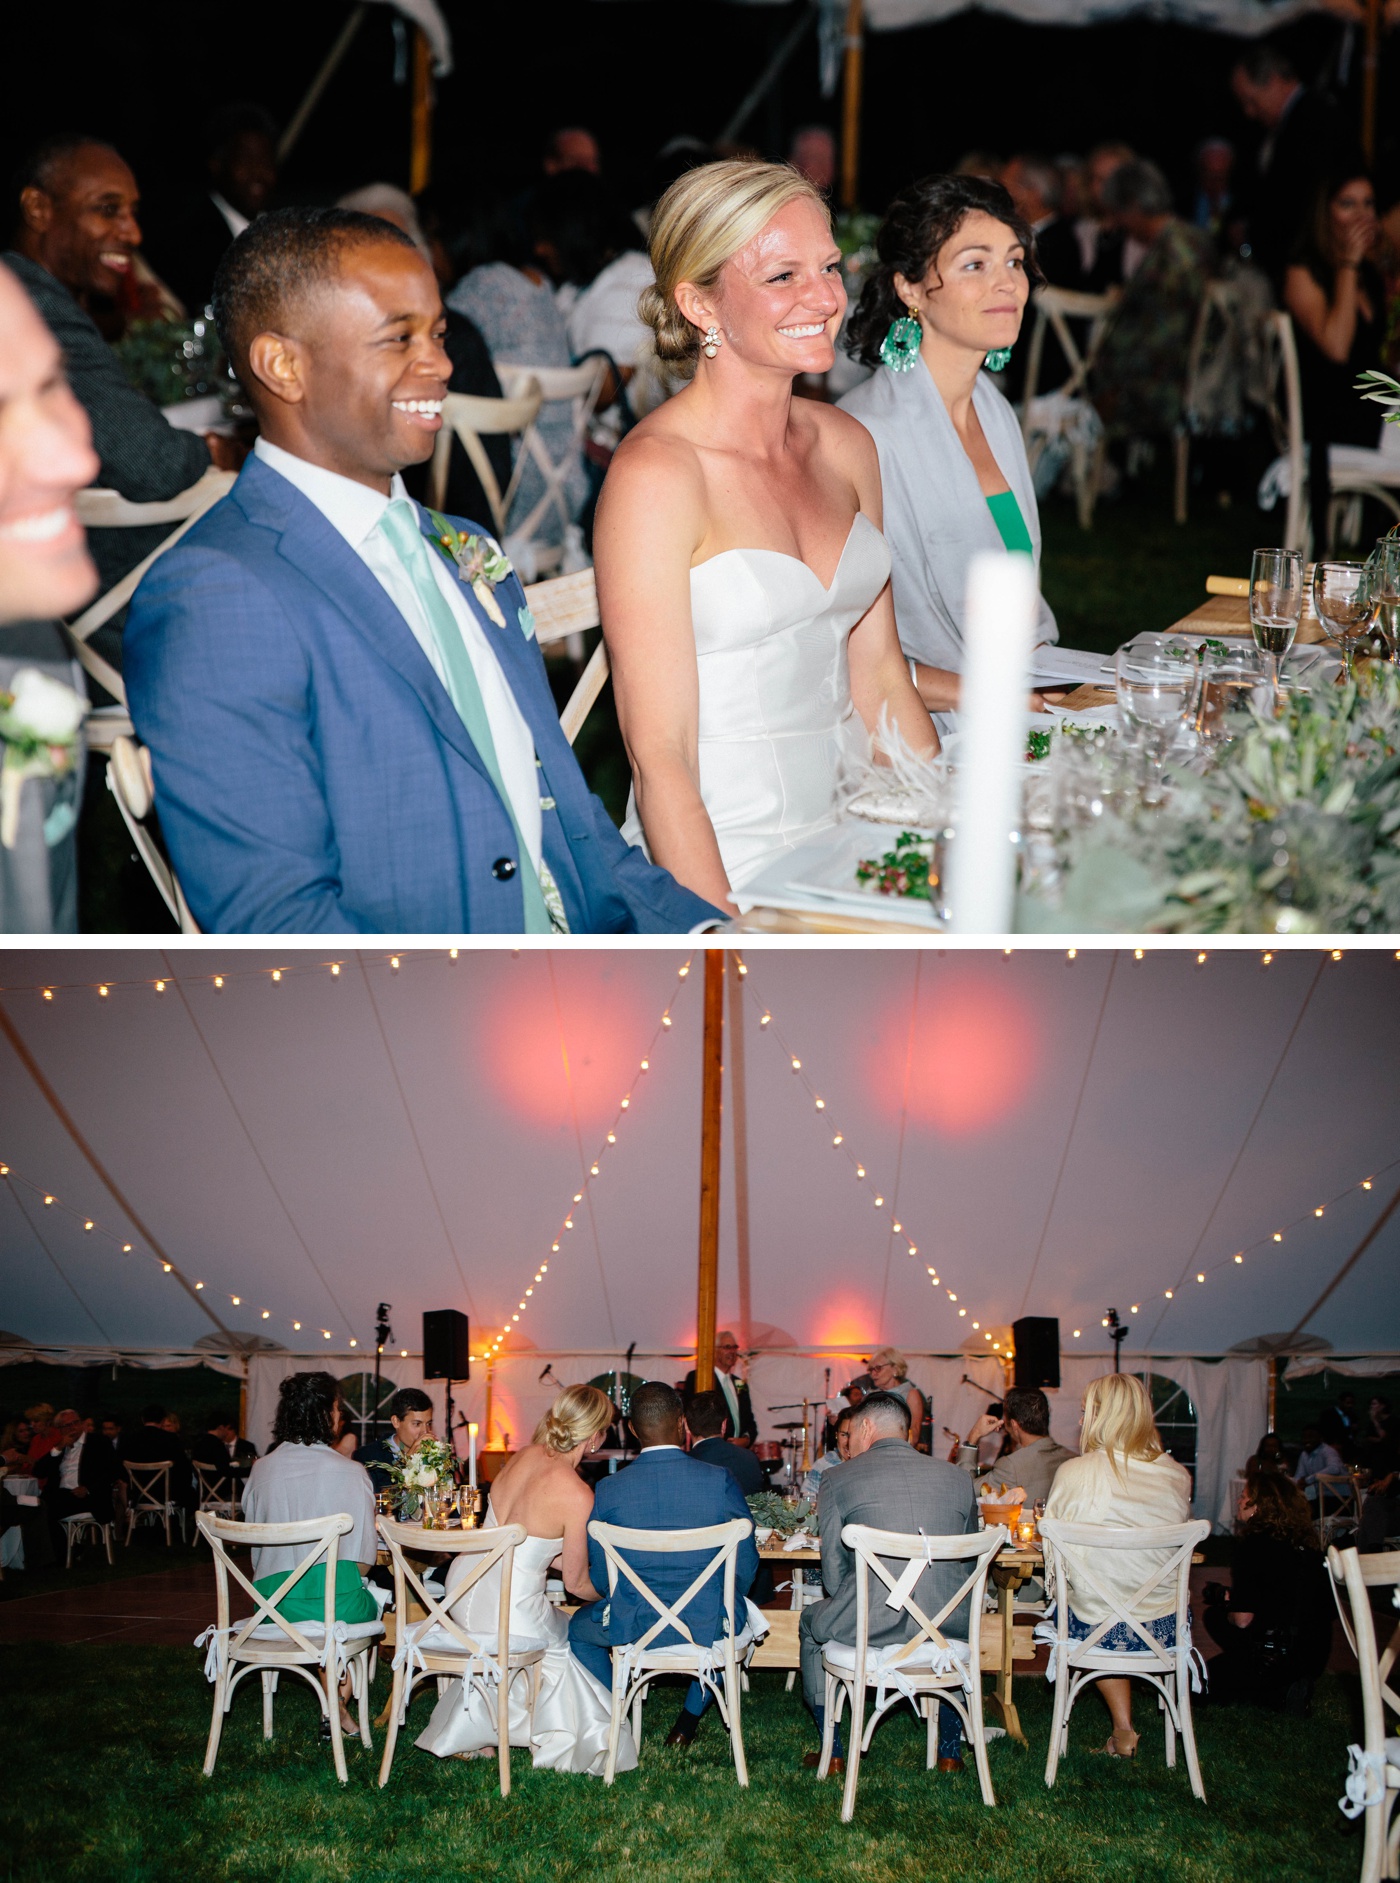 Outdoor wedding reception under a sailcloth tent